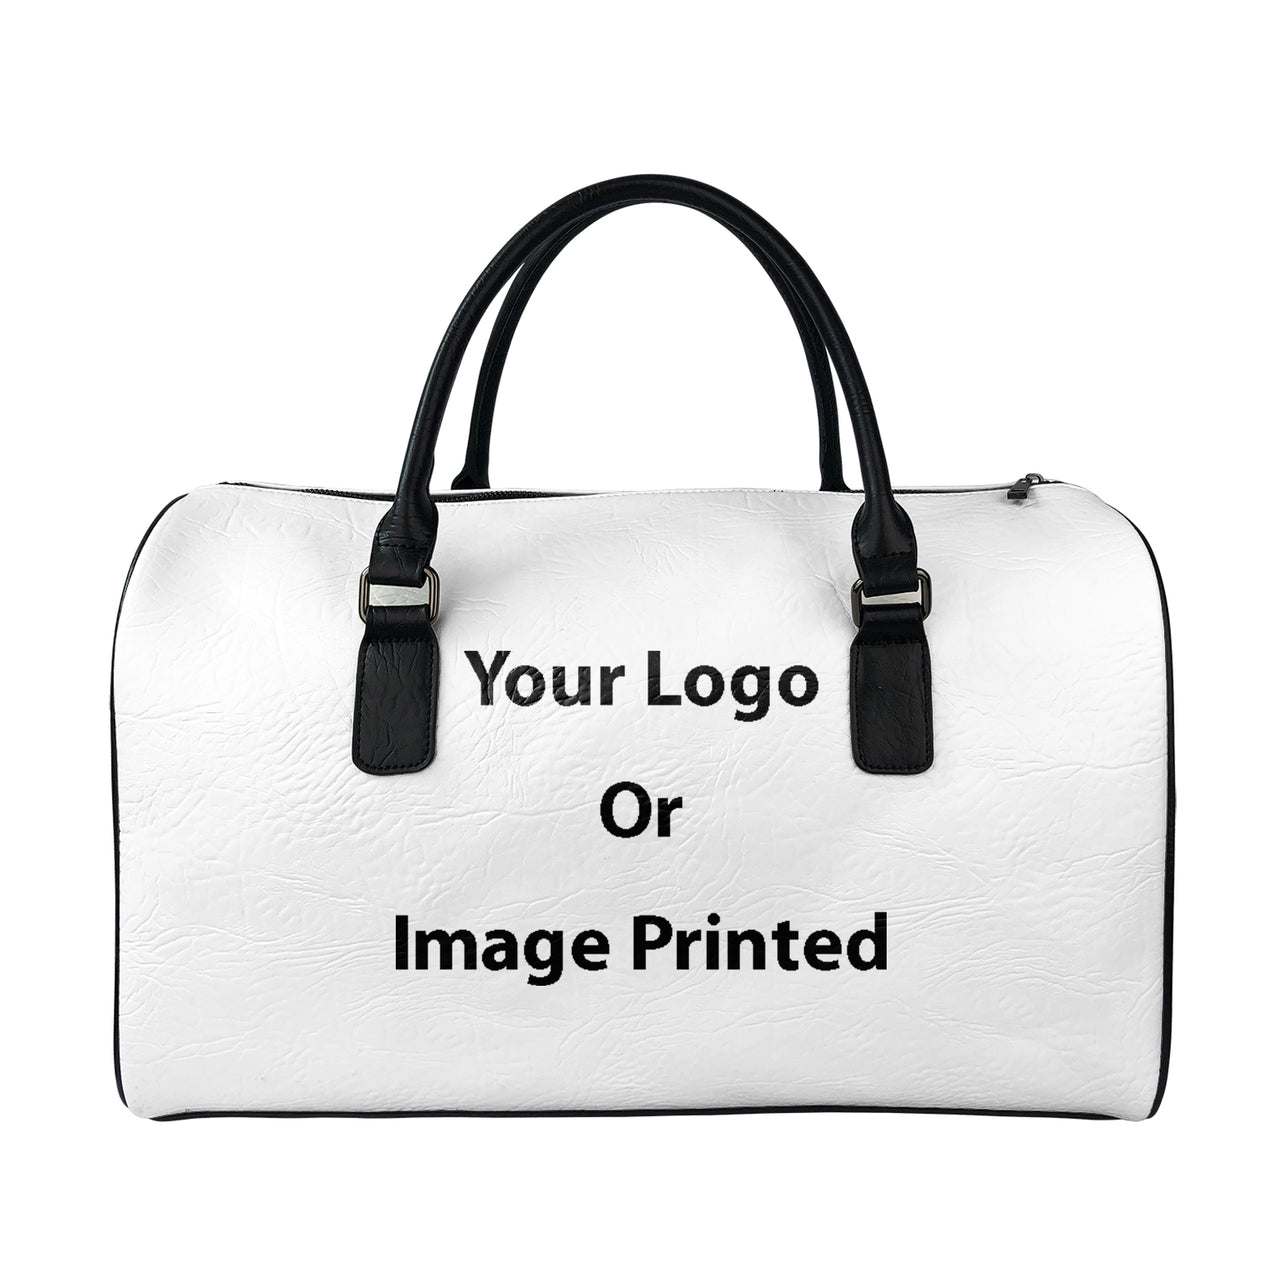 Custom Logo/Design/Image Designed Leather Travel Bag